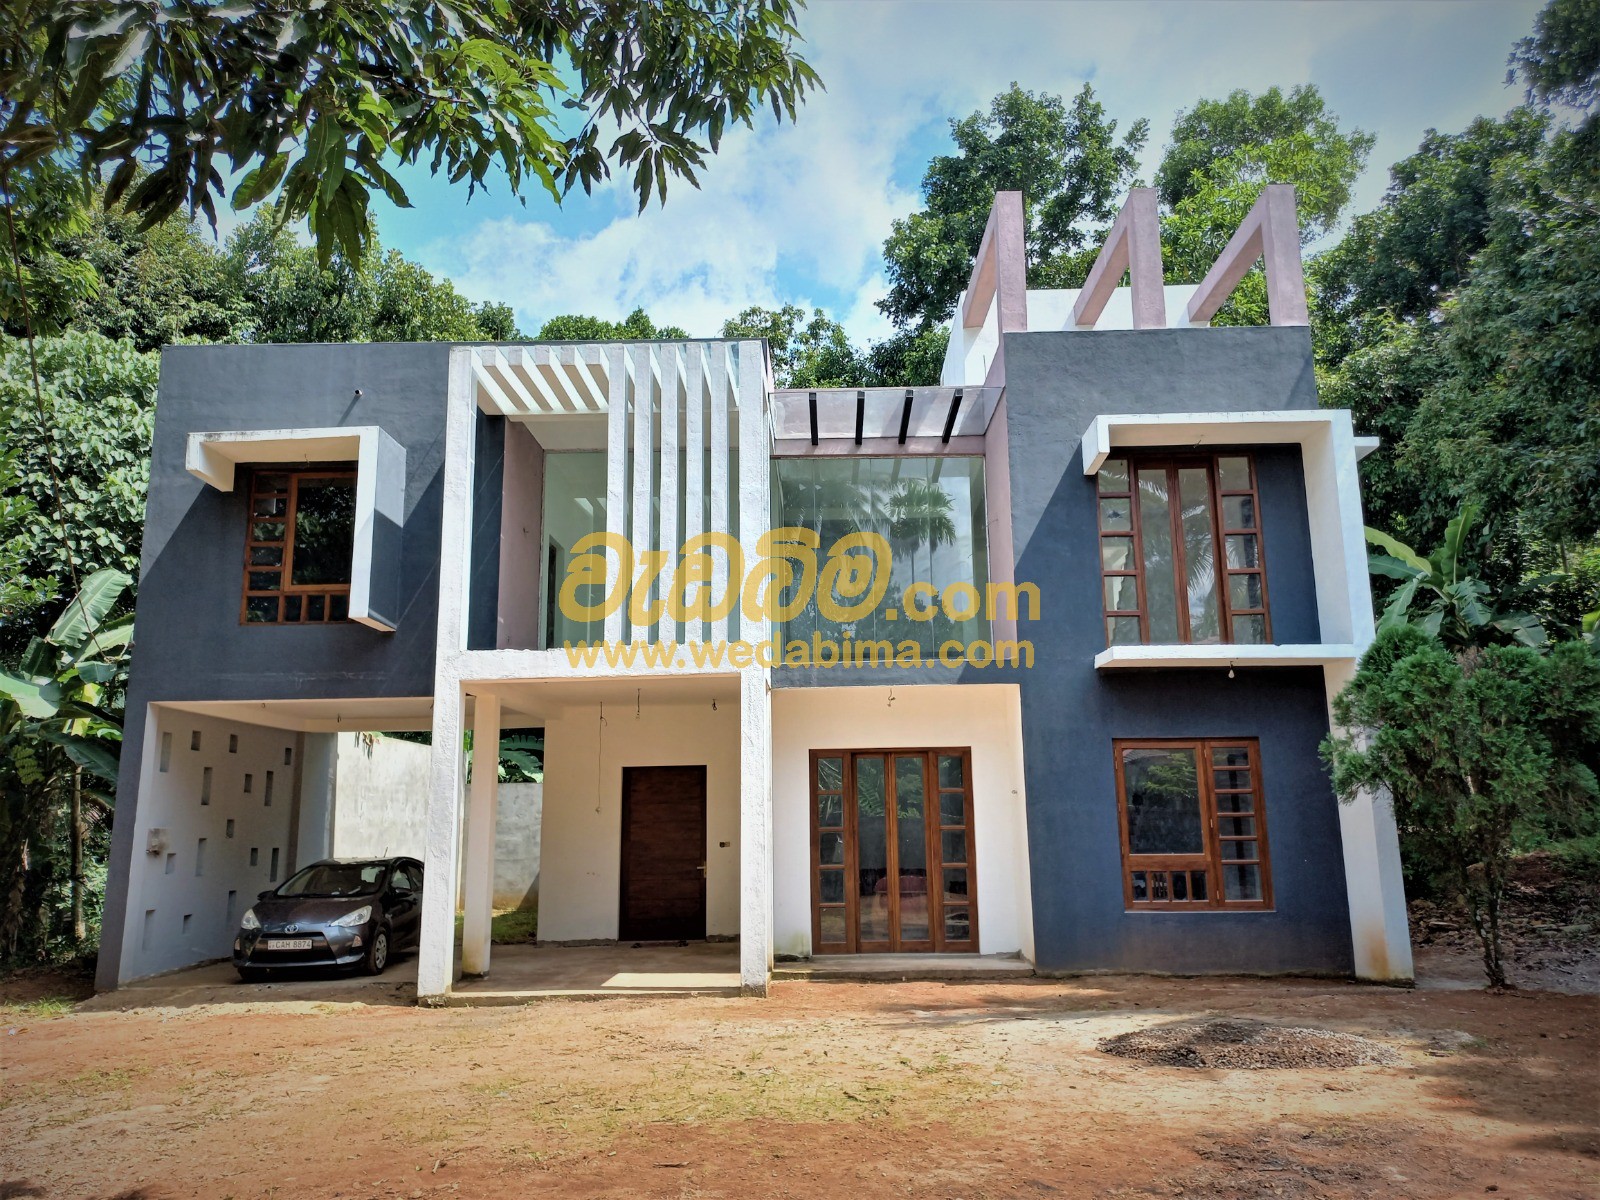 luxury house design in sri lanka